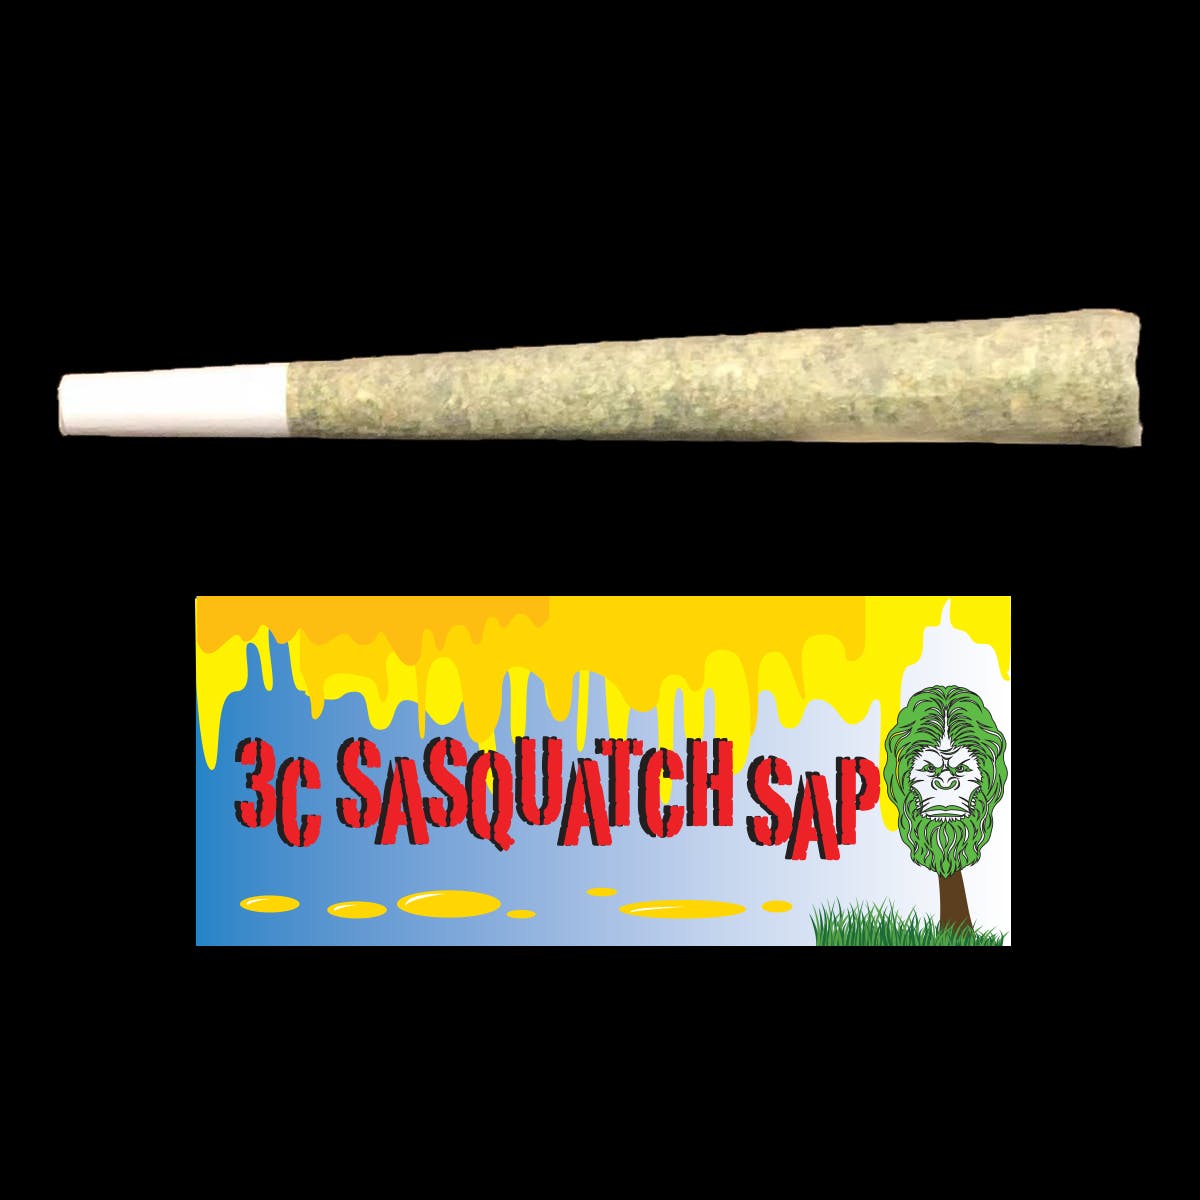 marijuana-dispensaries-7127-canoga-avenue-canoga-park-3c-sasquatch-sap-1g